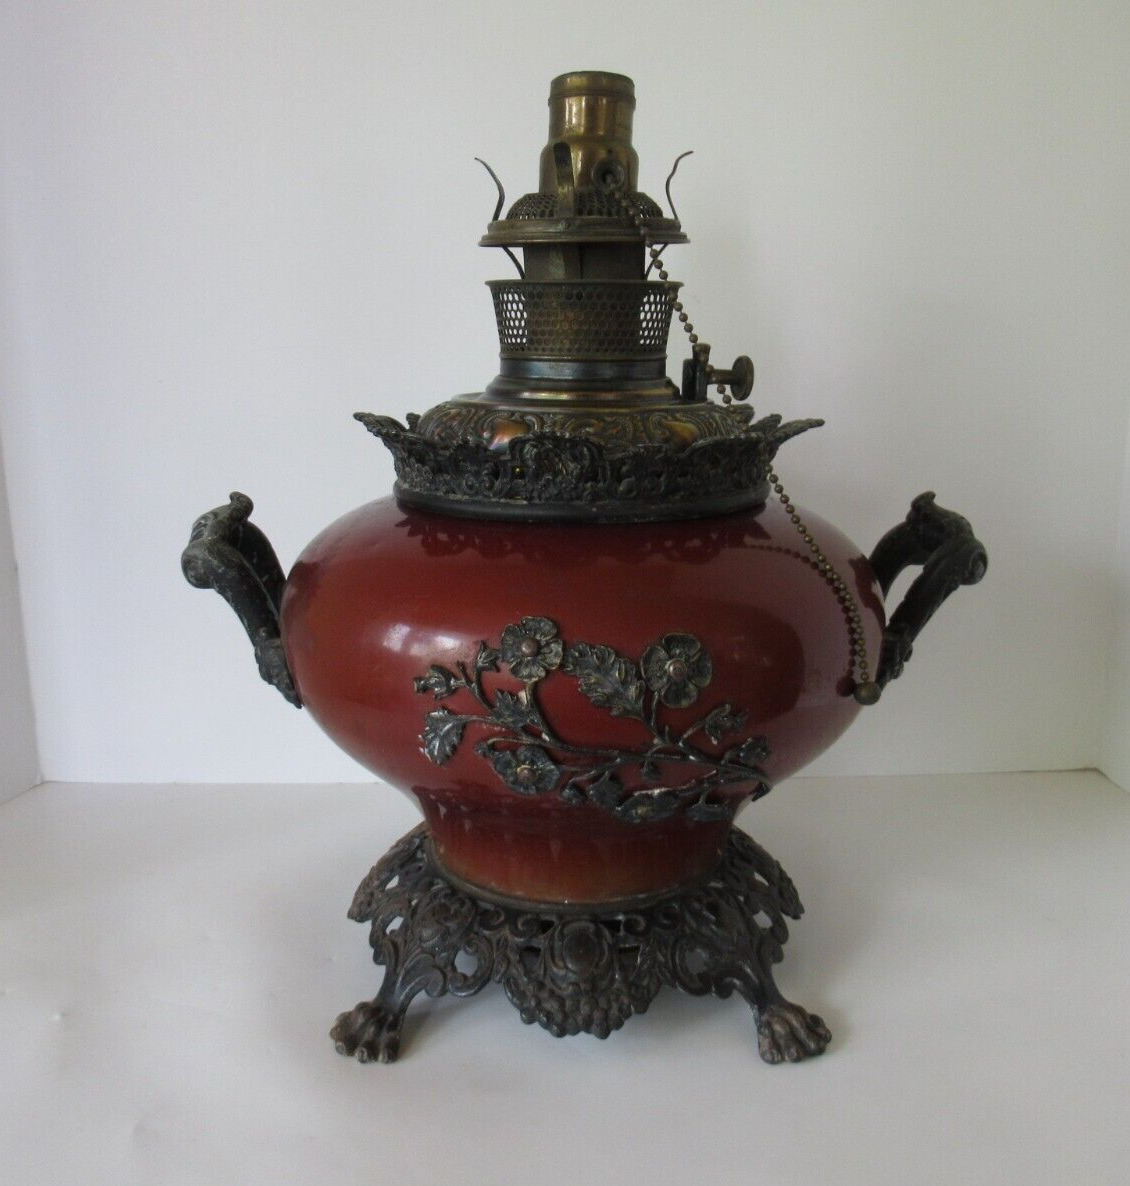 Antique Bradley & Hubbard converted oil lamp metal body applied handles ornate